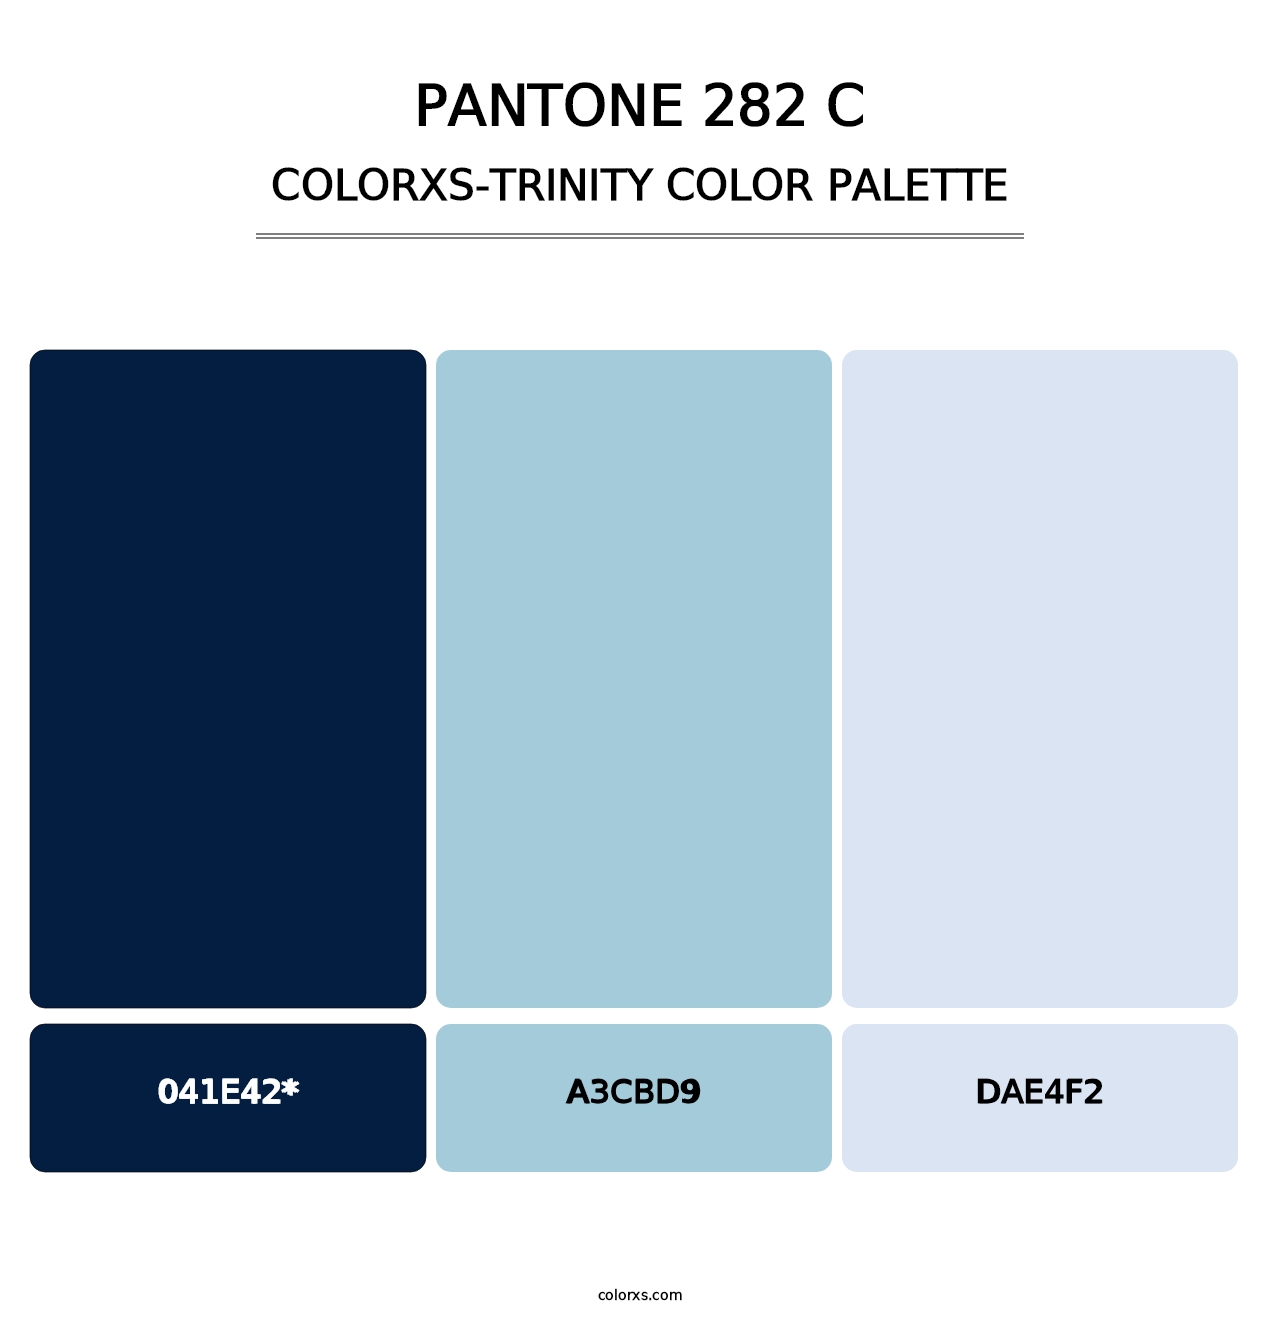 PANTONE 282 C - Colorxs Trinity Palette